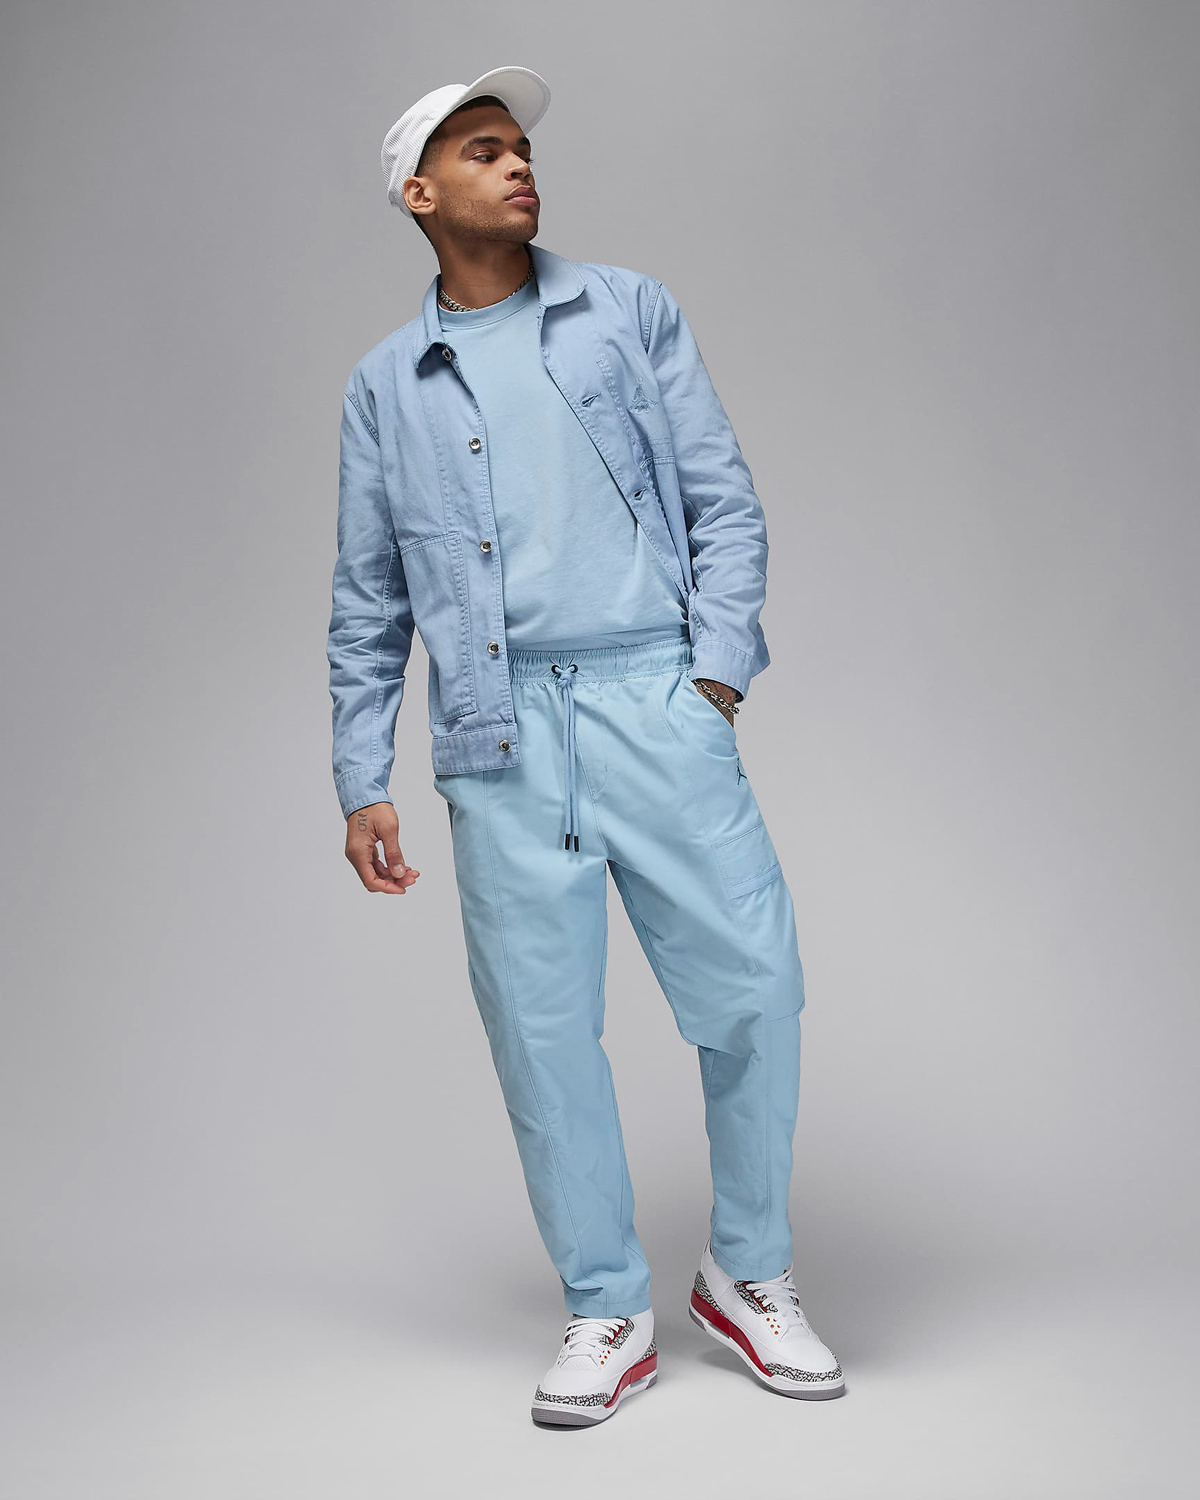 Jordan-Essentials-Woven-Pants-Blue-Grey-Outfit